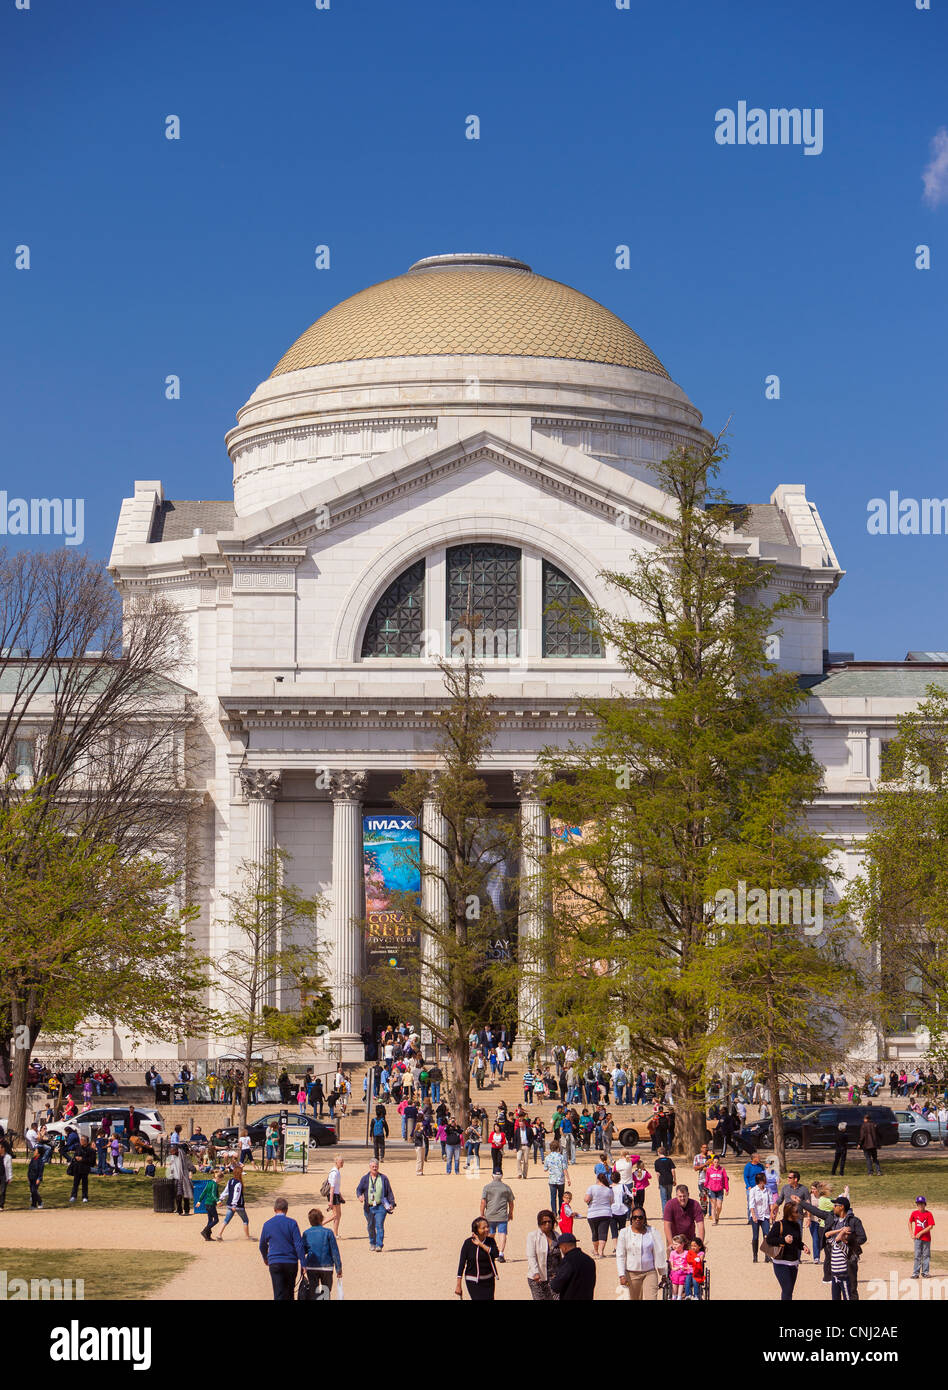 WASHINGTON, DC, USA - Smithsonian Museum of Natural History. Stock Photo